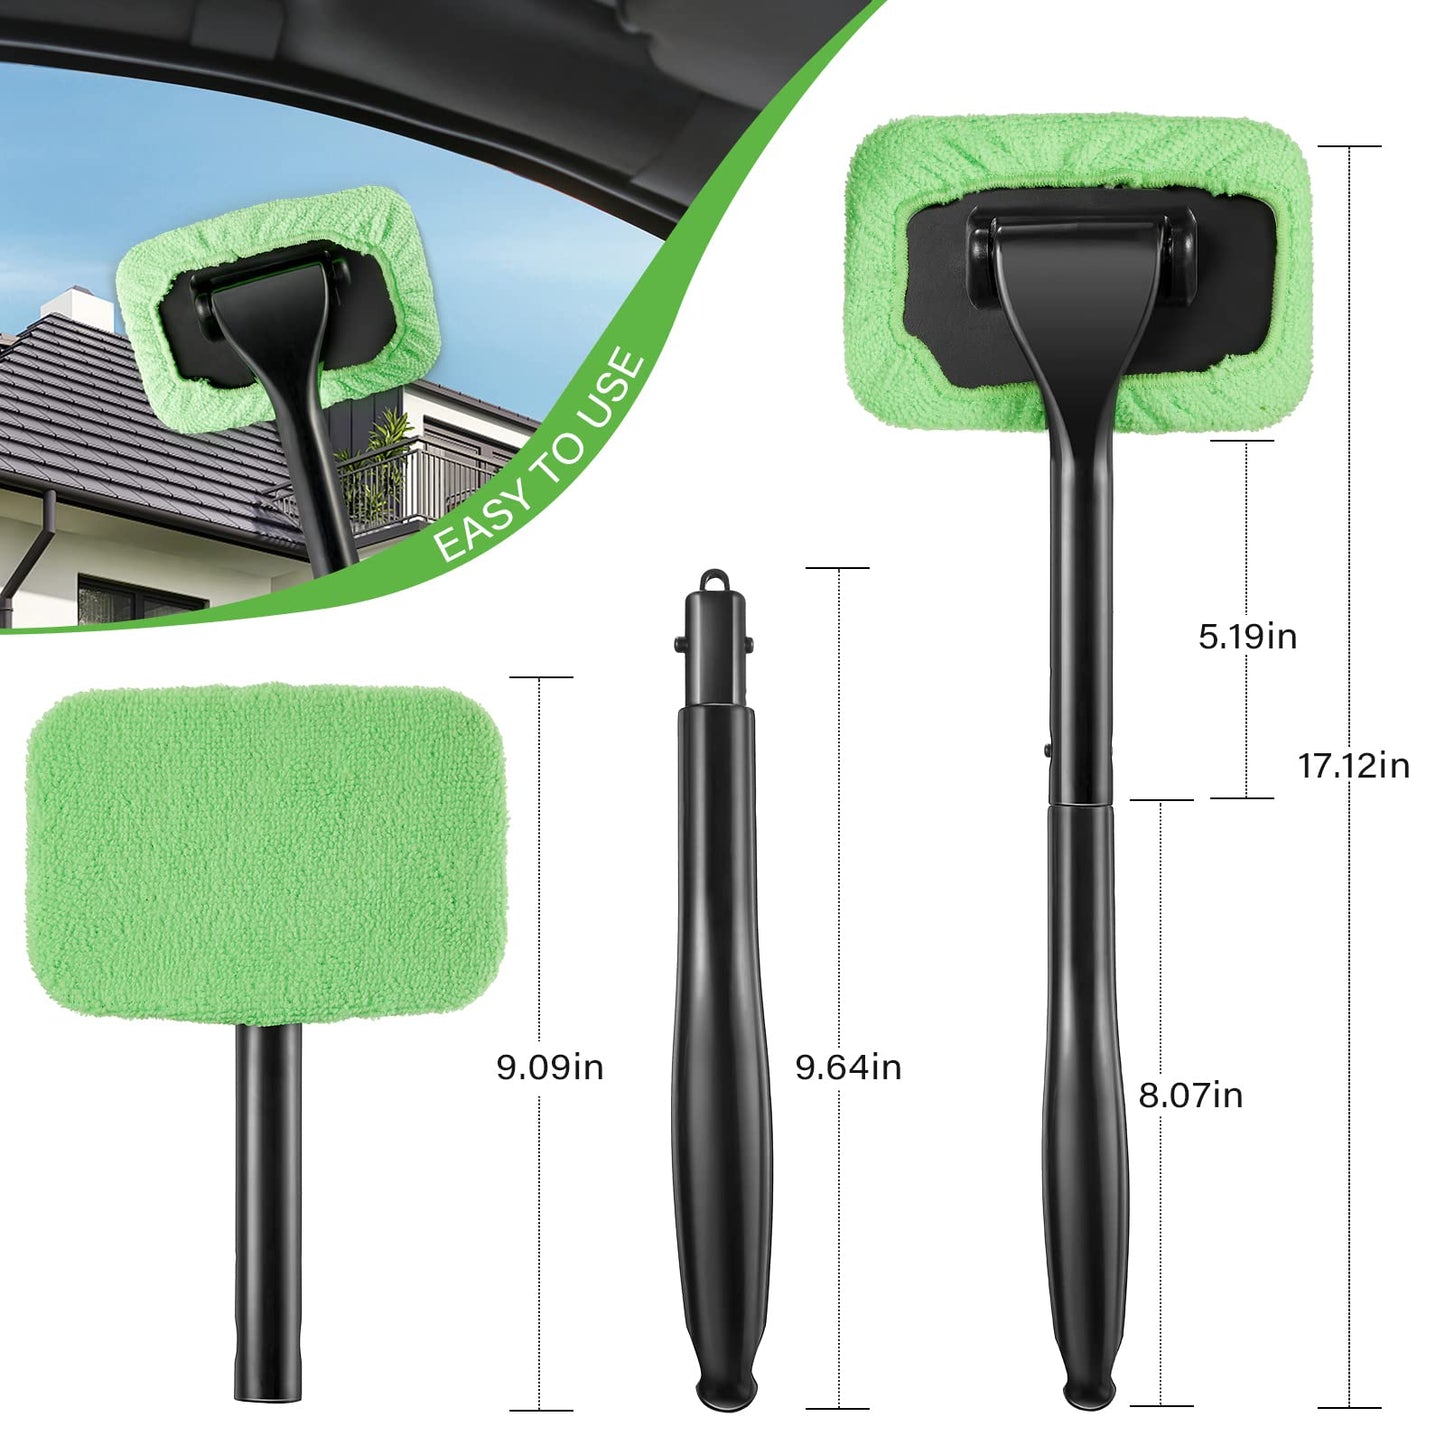 3pcs Car Window Cleaner Brush Kit Windshield Wiper Microfiber Wiper Cleaner Cleaning Brush Auto Cleaning Wash Tool Long Handle